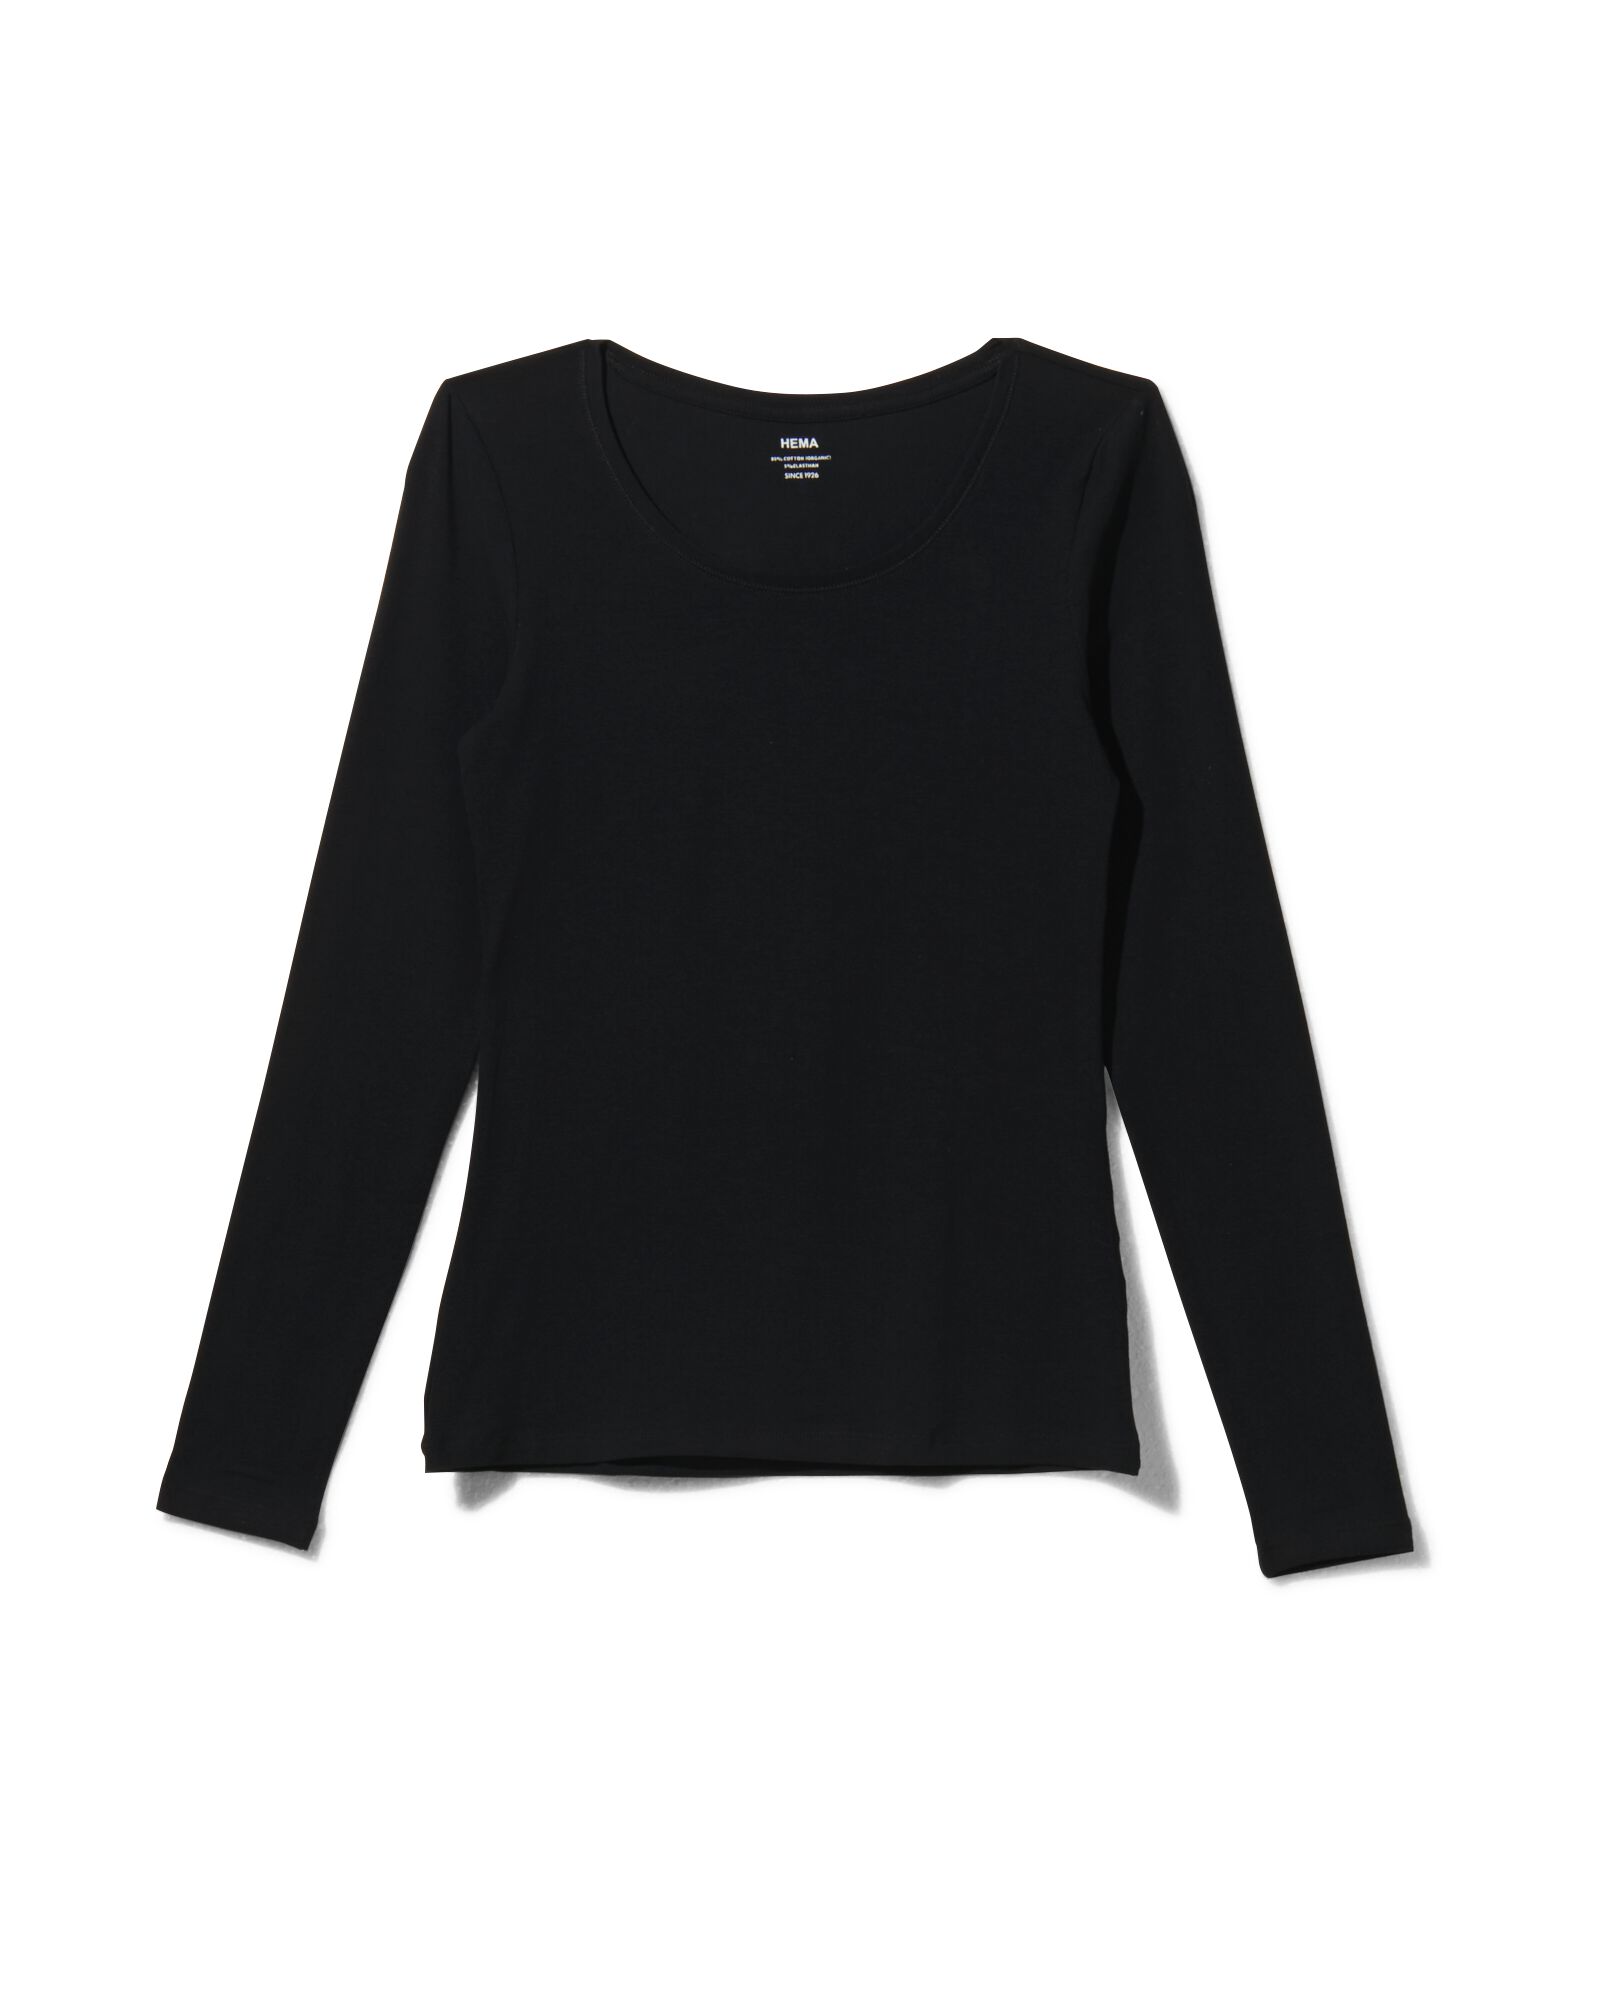 Image of HEMA Dames Basic T-shirt Zwart (zwart)